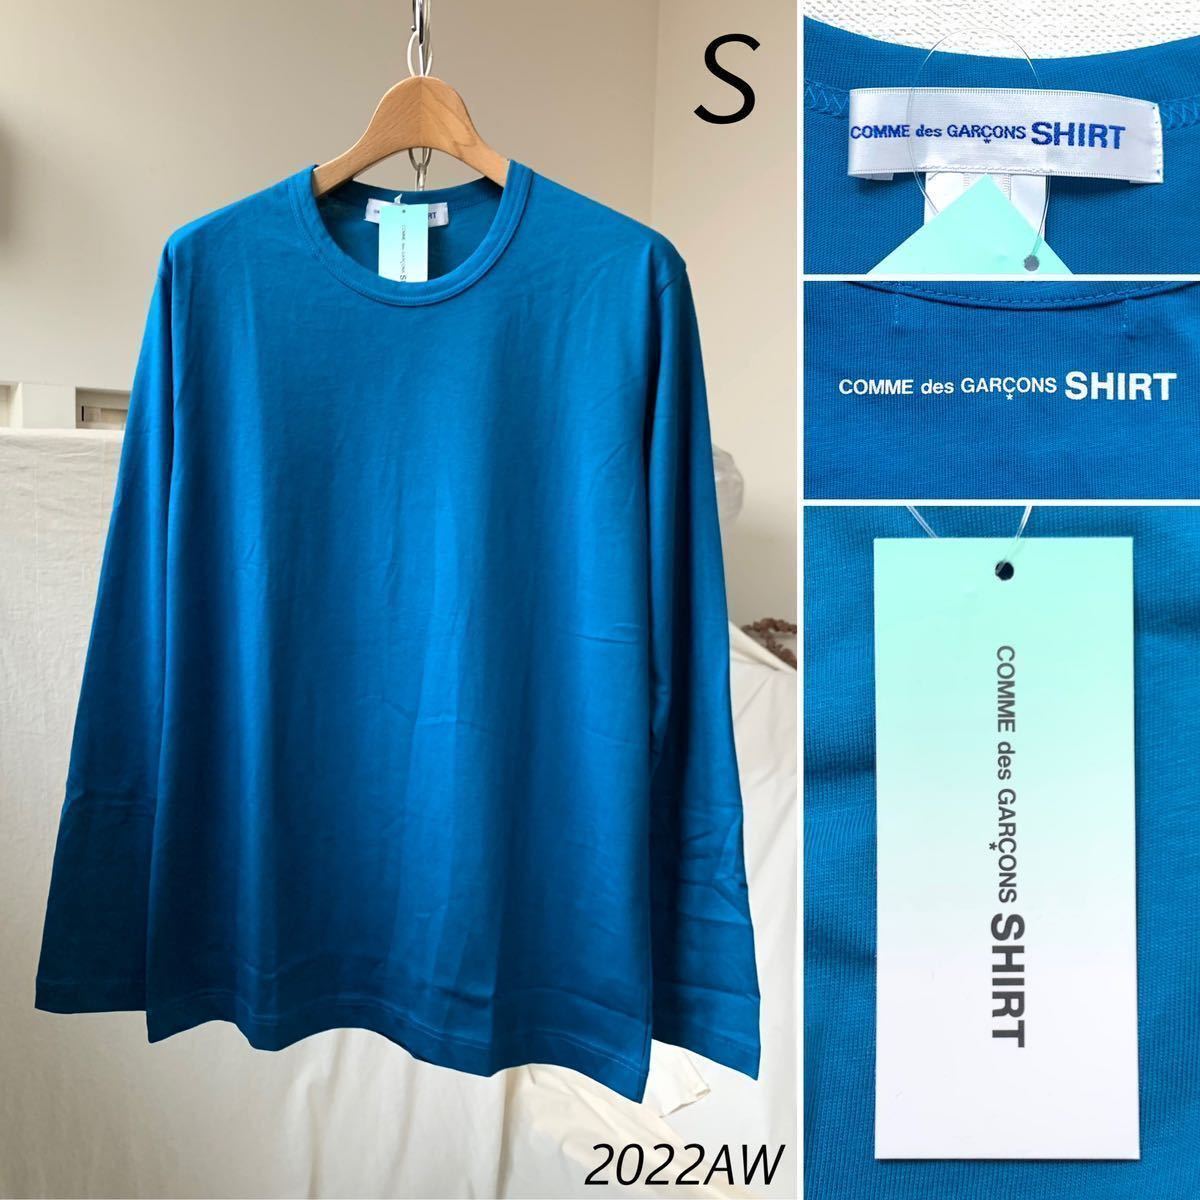 S 新品 2022AW コムデギャルソンシャツ 背面 ロゴ 長袖 Tシャツ ブルー Comme des Garcons Shirt FJ-T015 メンズの画像1